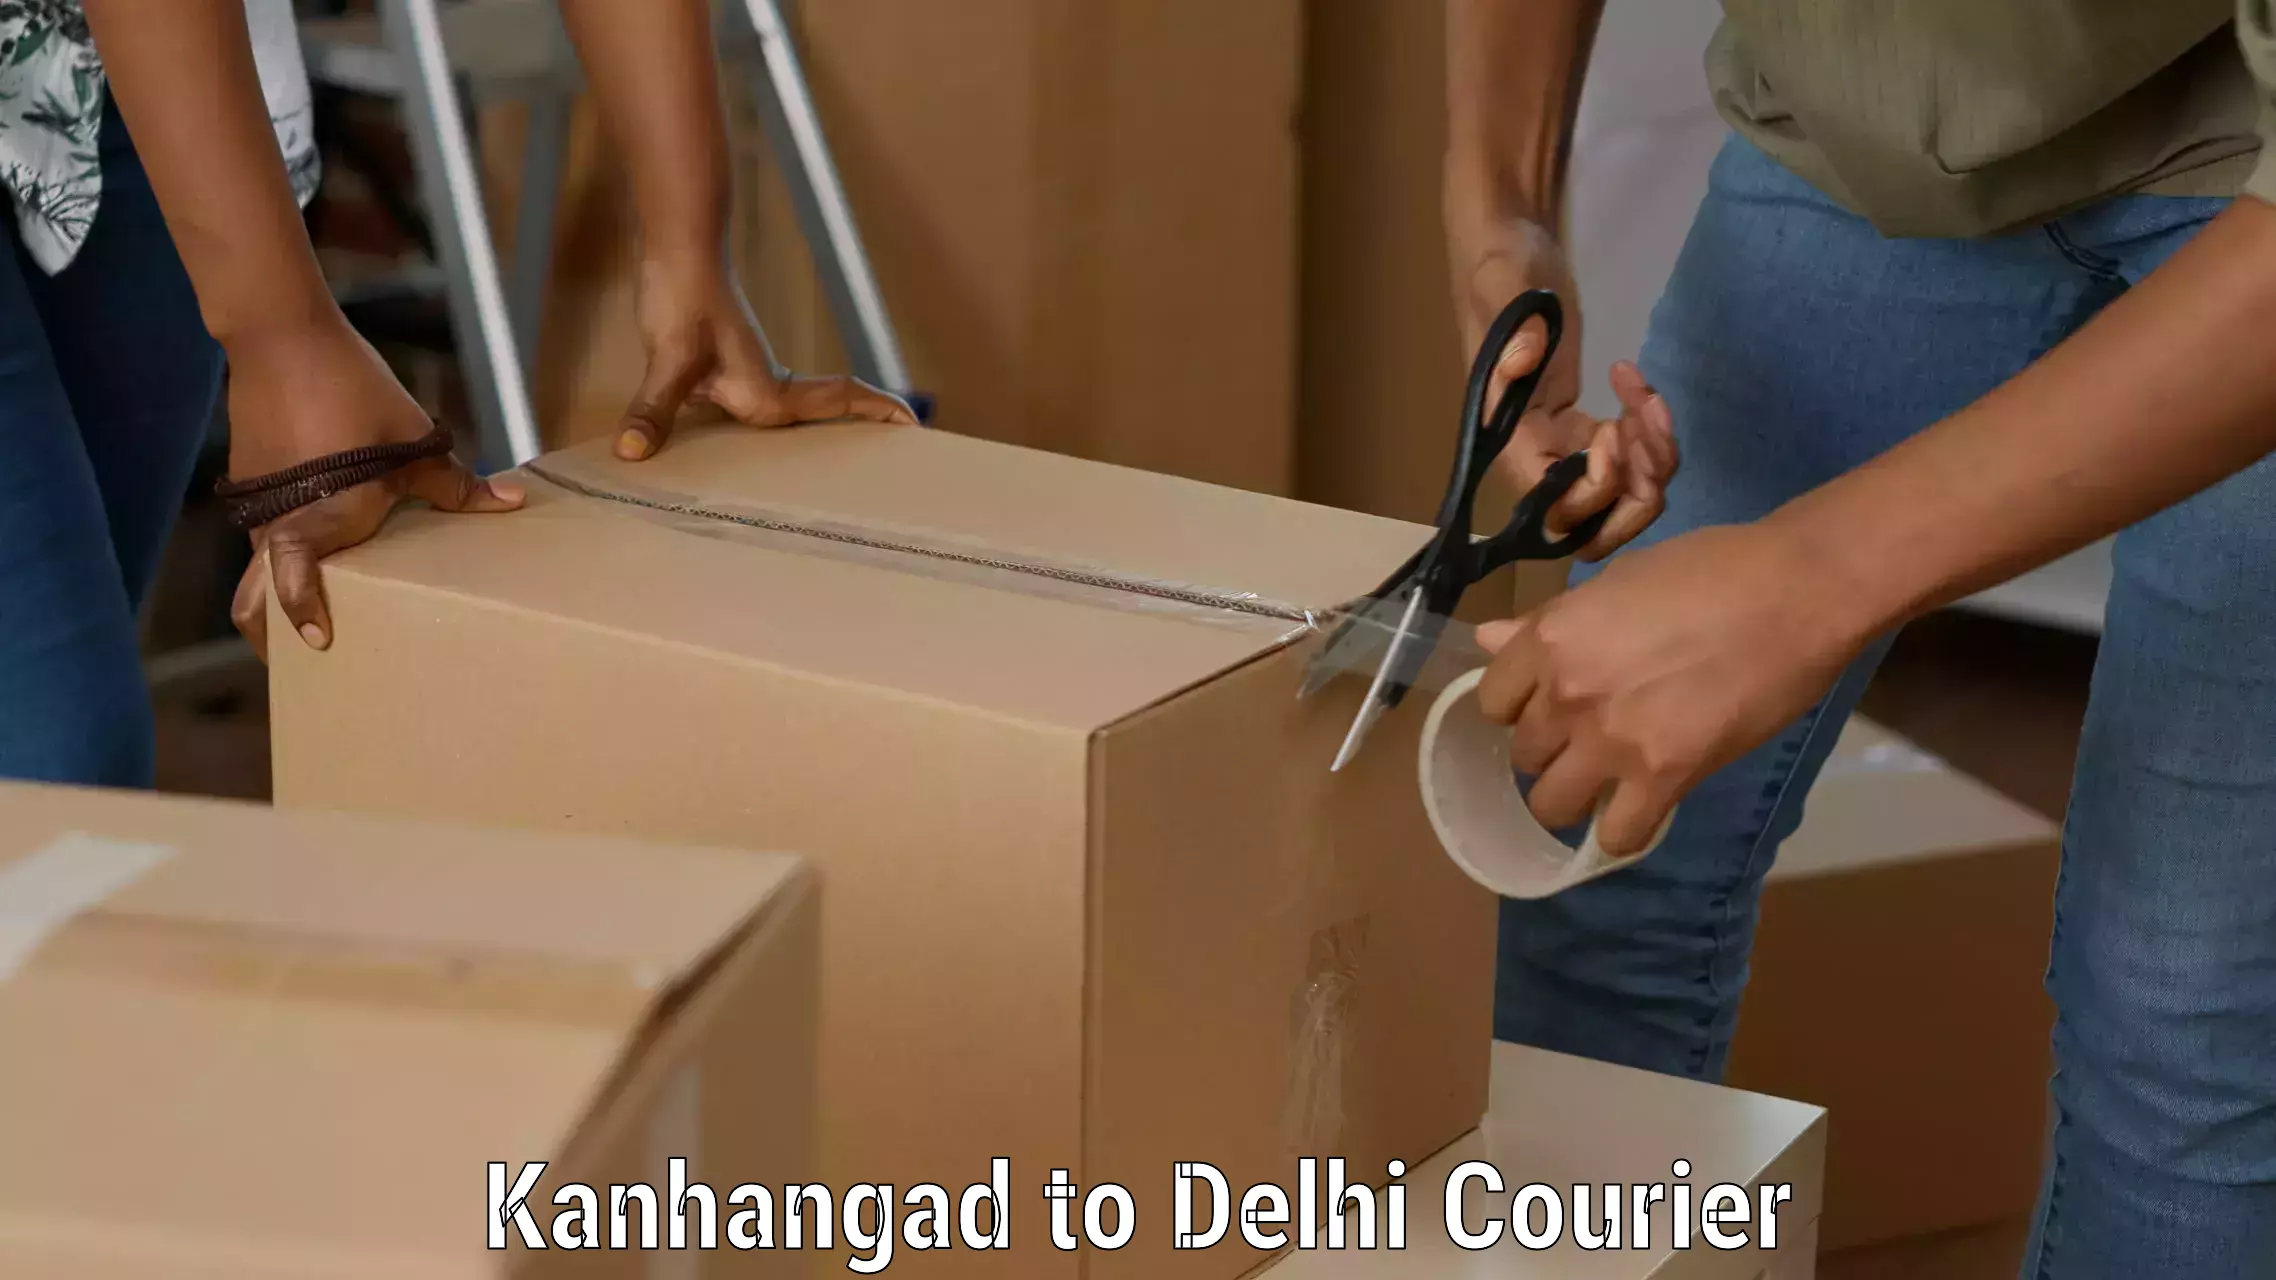 Courier service booking Kanhangad to Delhi